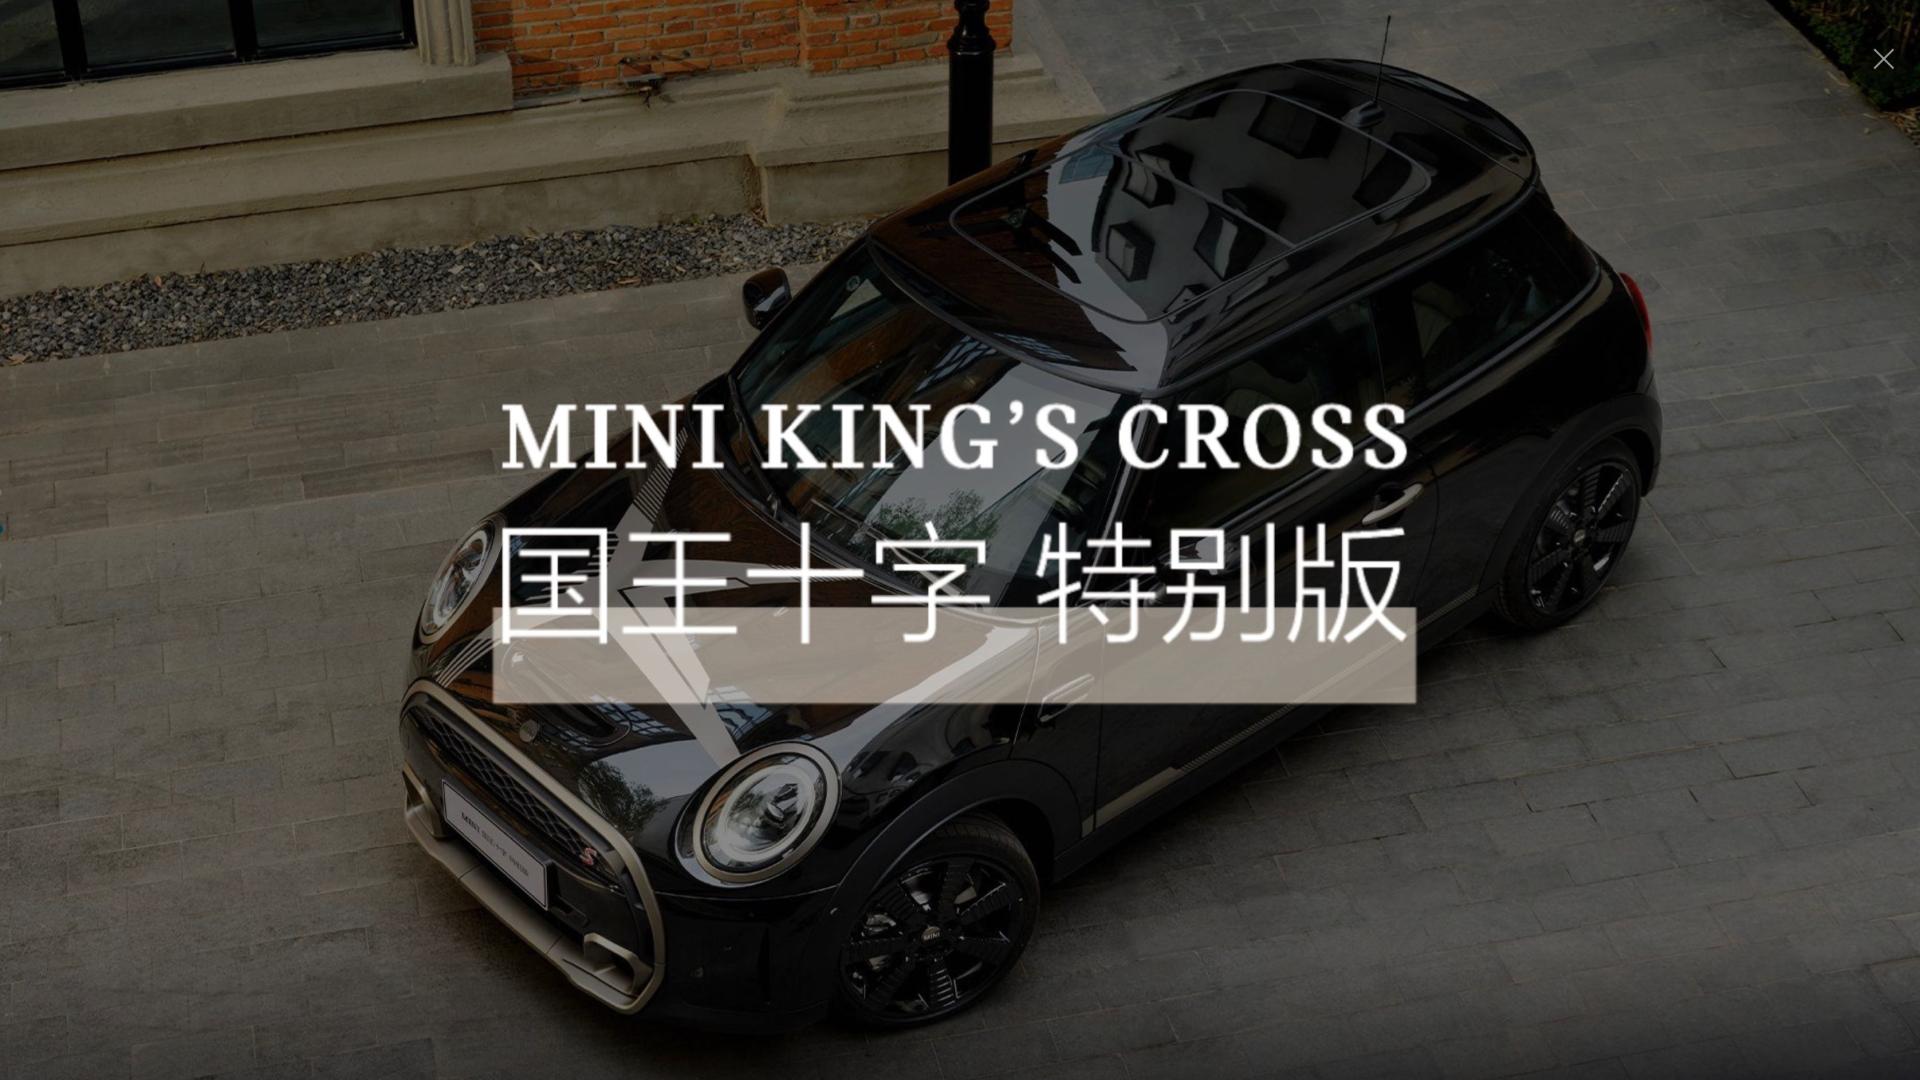 MINI KING'S CROSS国王十字特别版特辑